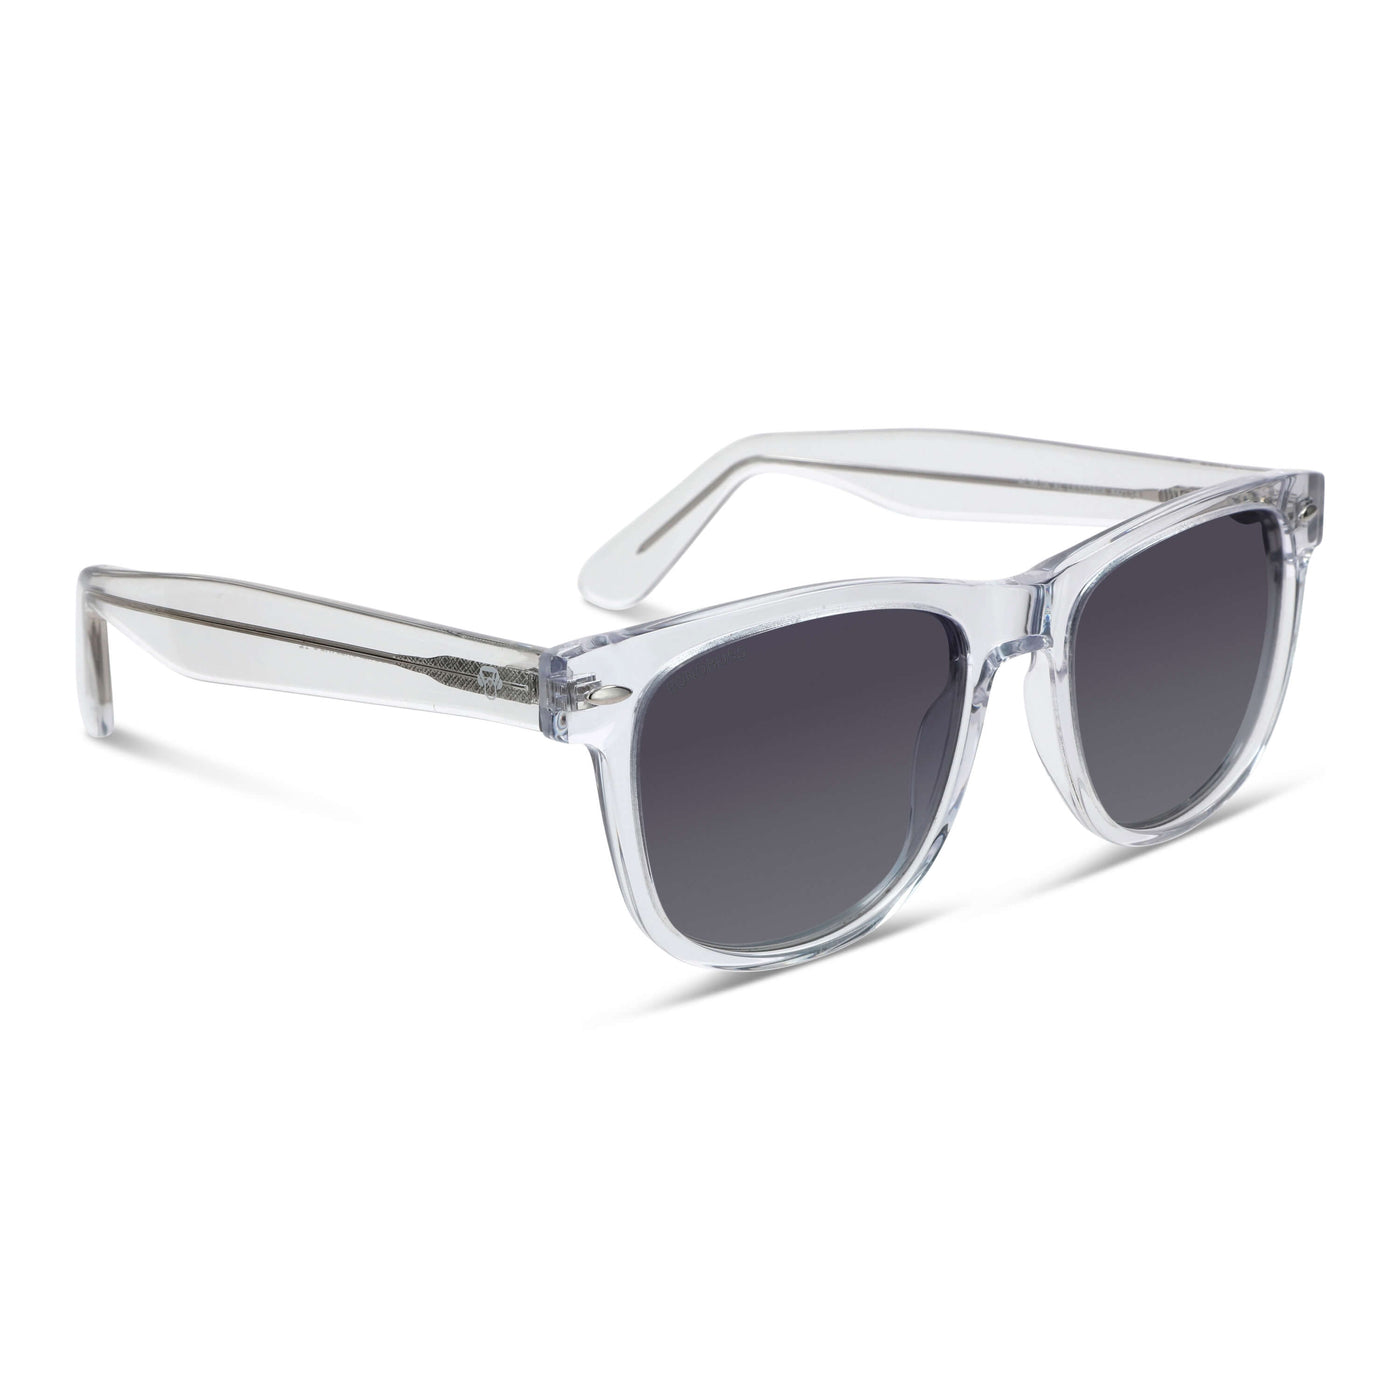 anteojos lentes de sol polarizados de color negro forma clásica para hombre y mujer de cara redonda con o sin receta optica grandes tamaño XL